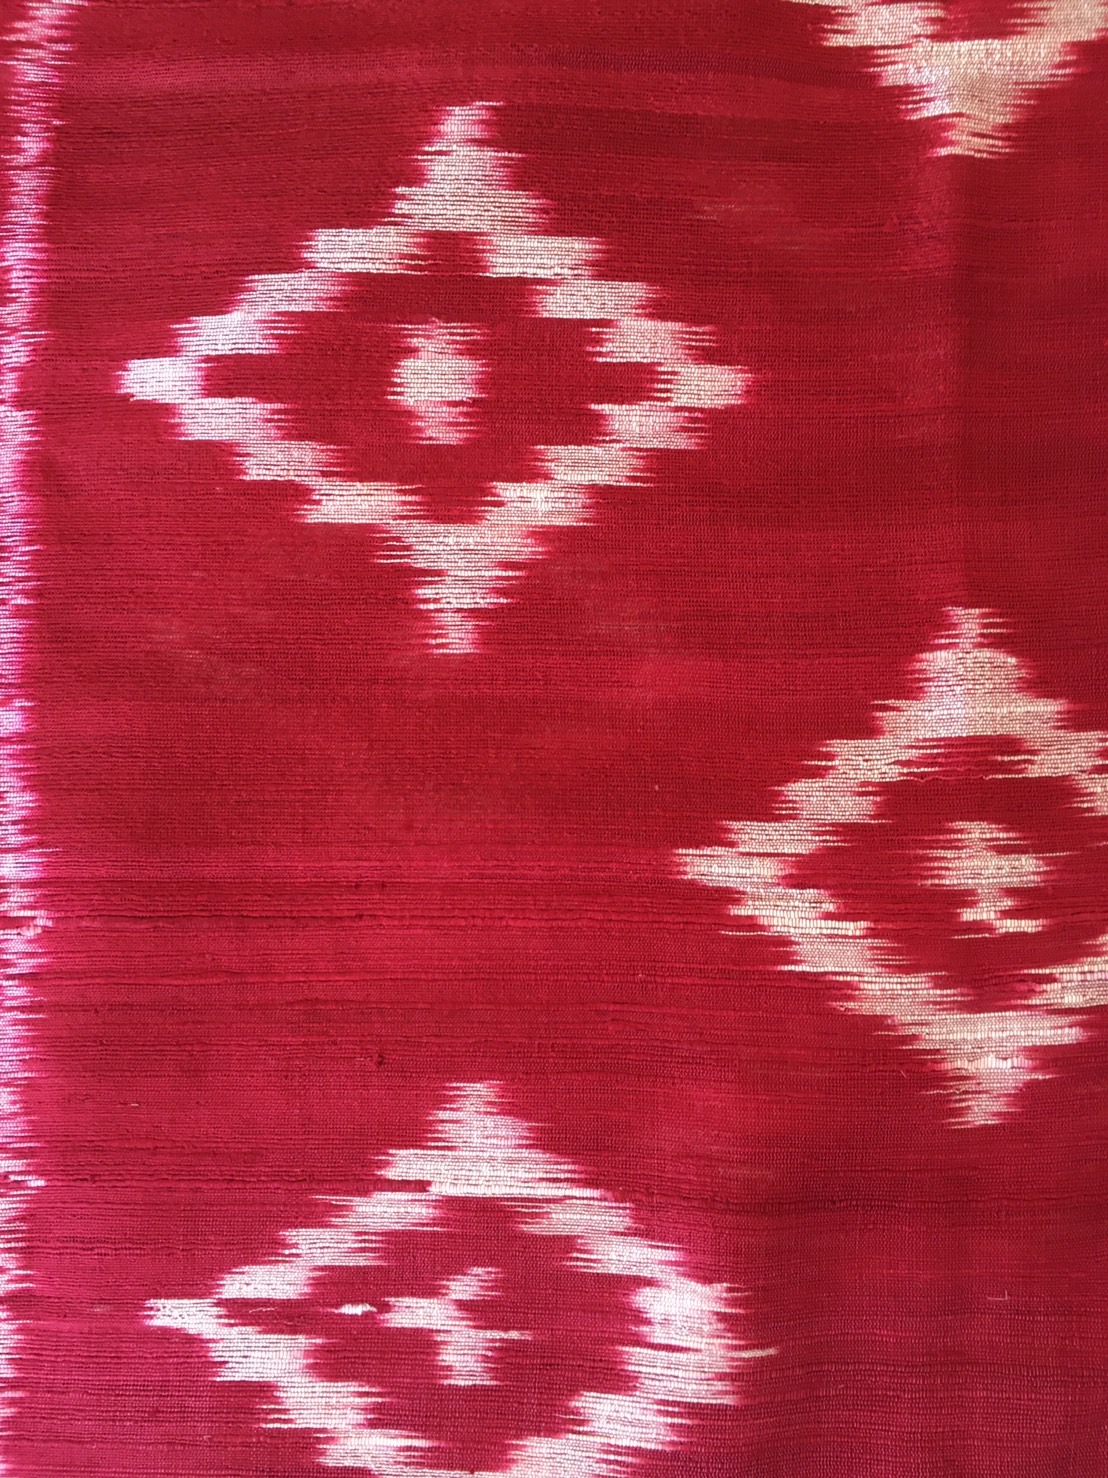 Grand foulard en soie rouge intense - MOONOI